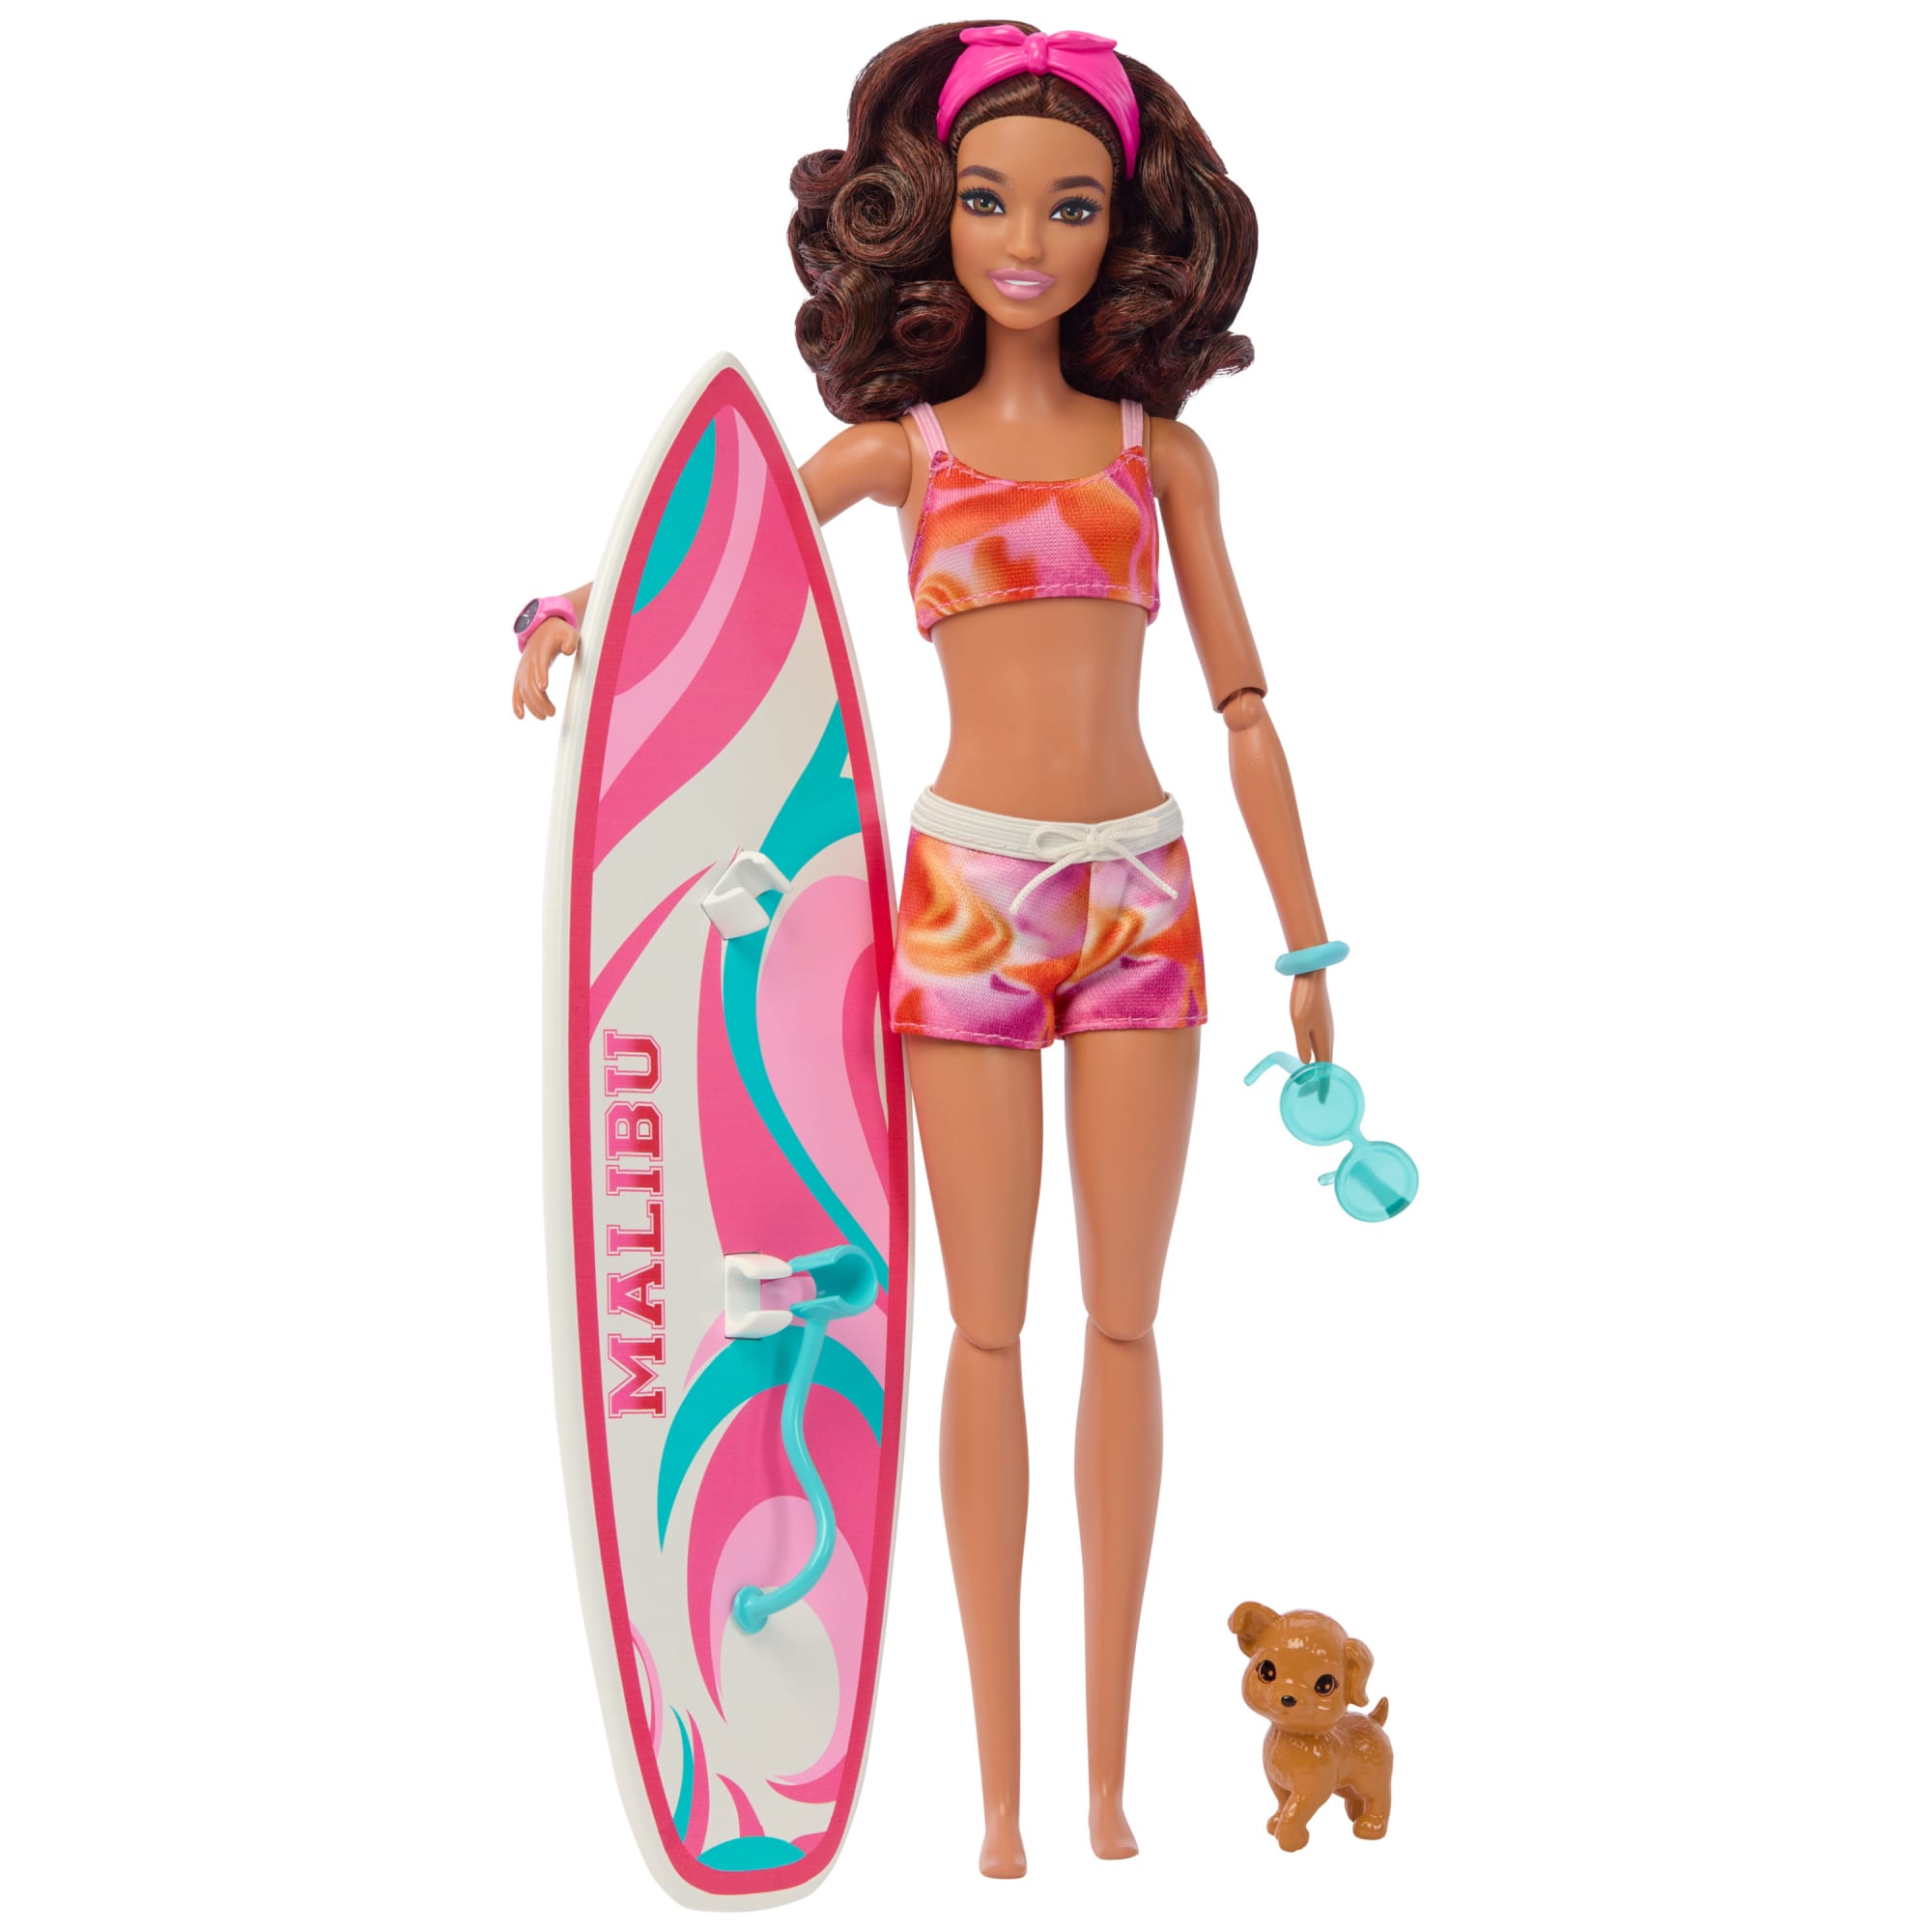 Barbie poupée articulée brune Mattel